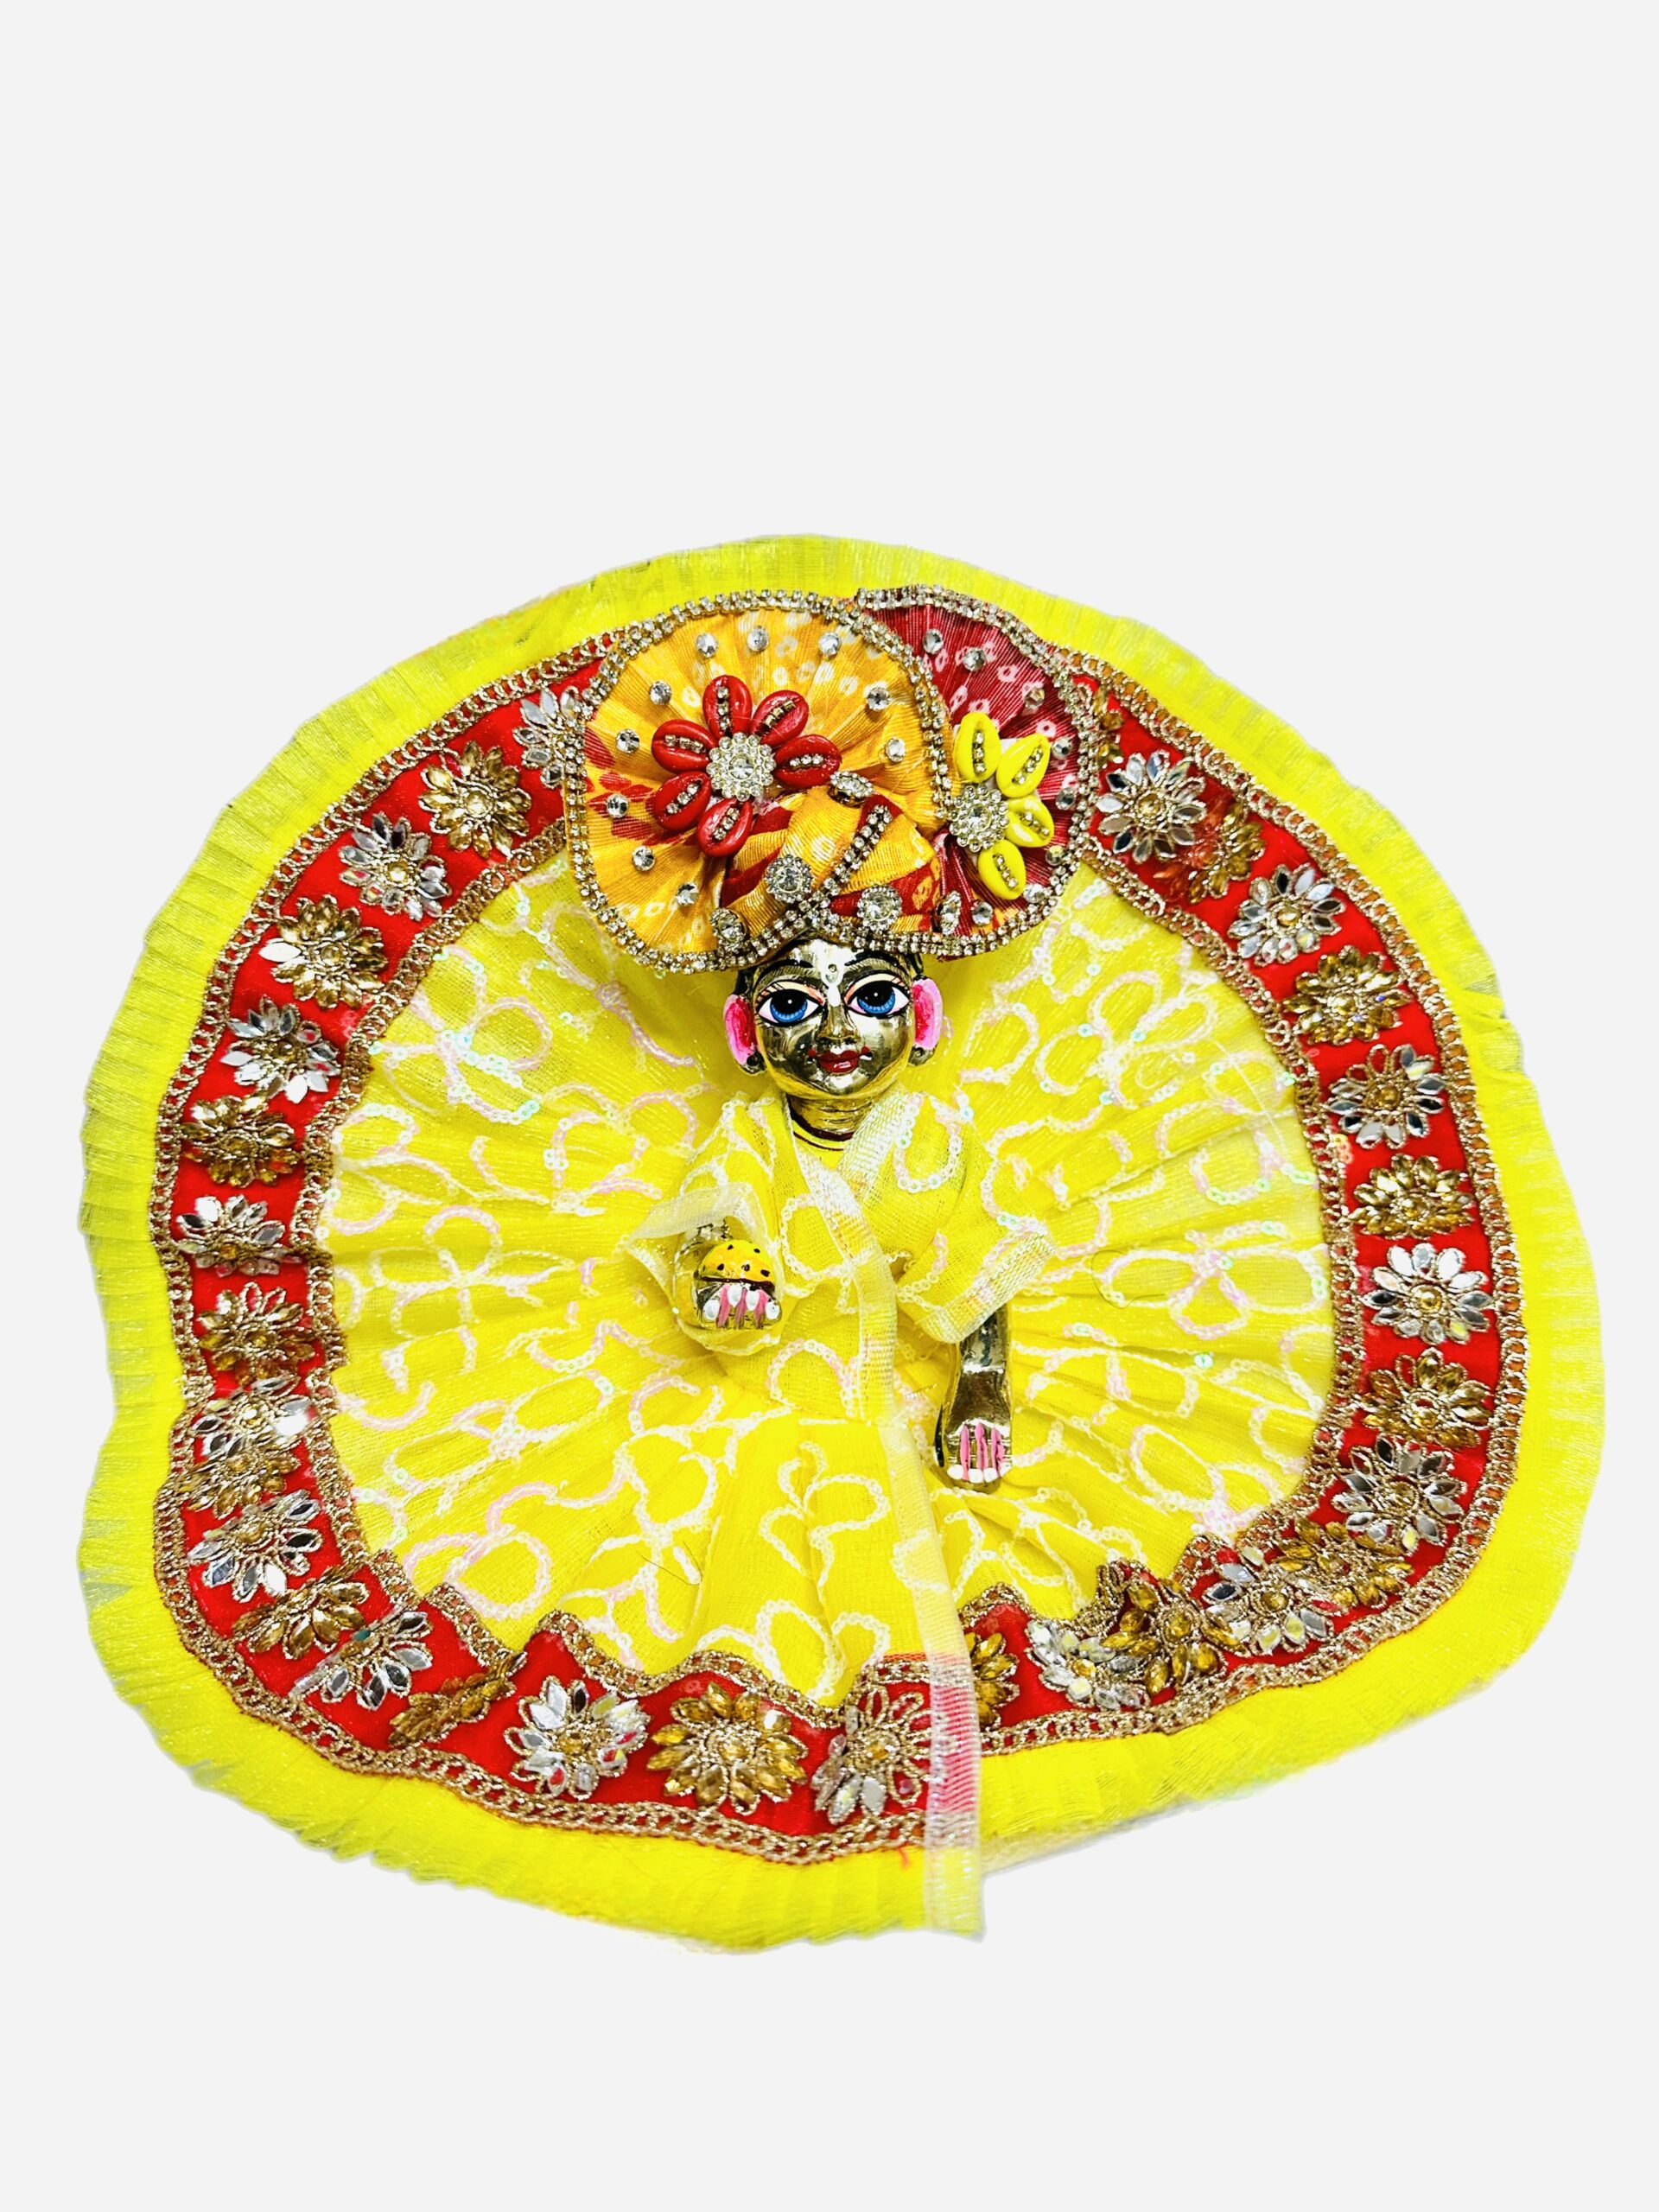 Royal Morpankhi Feather Dress for Laddu Gopal Ji